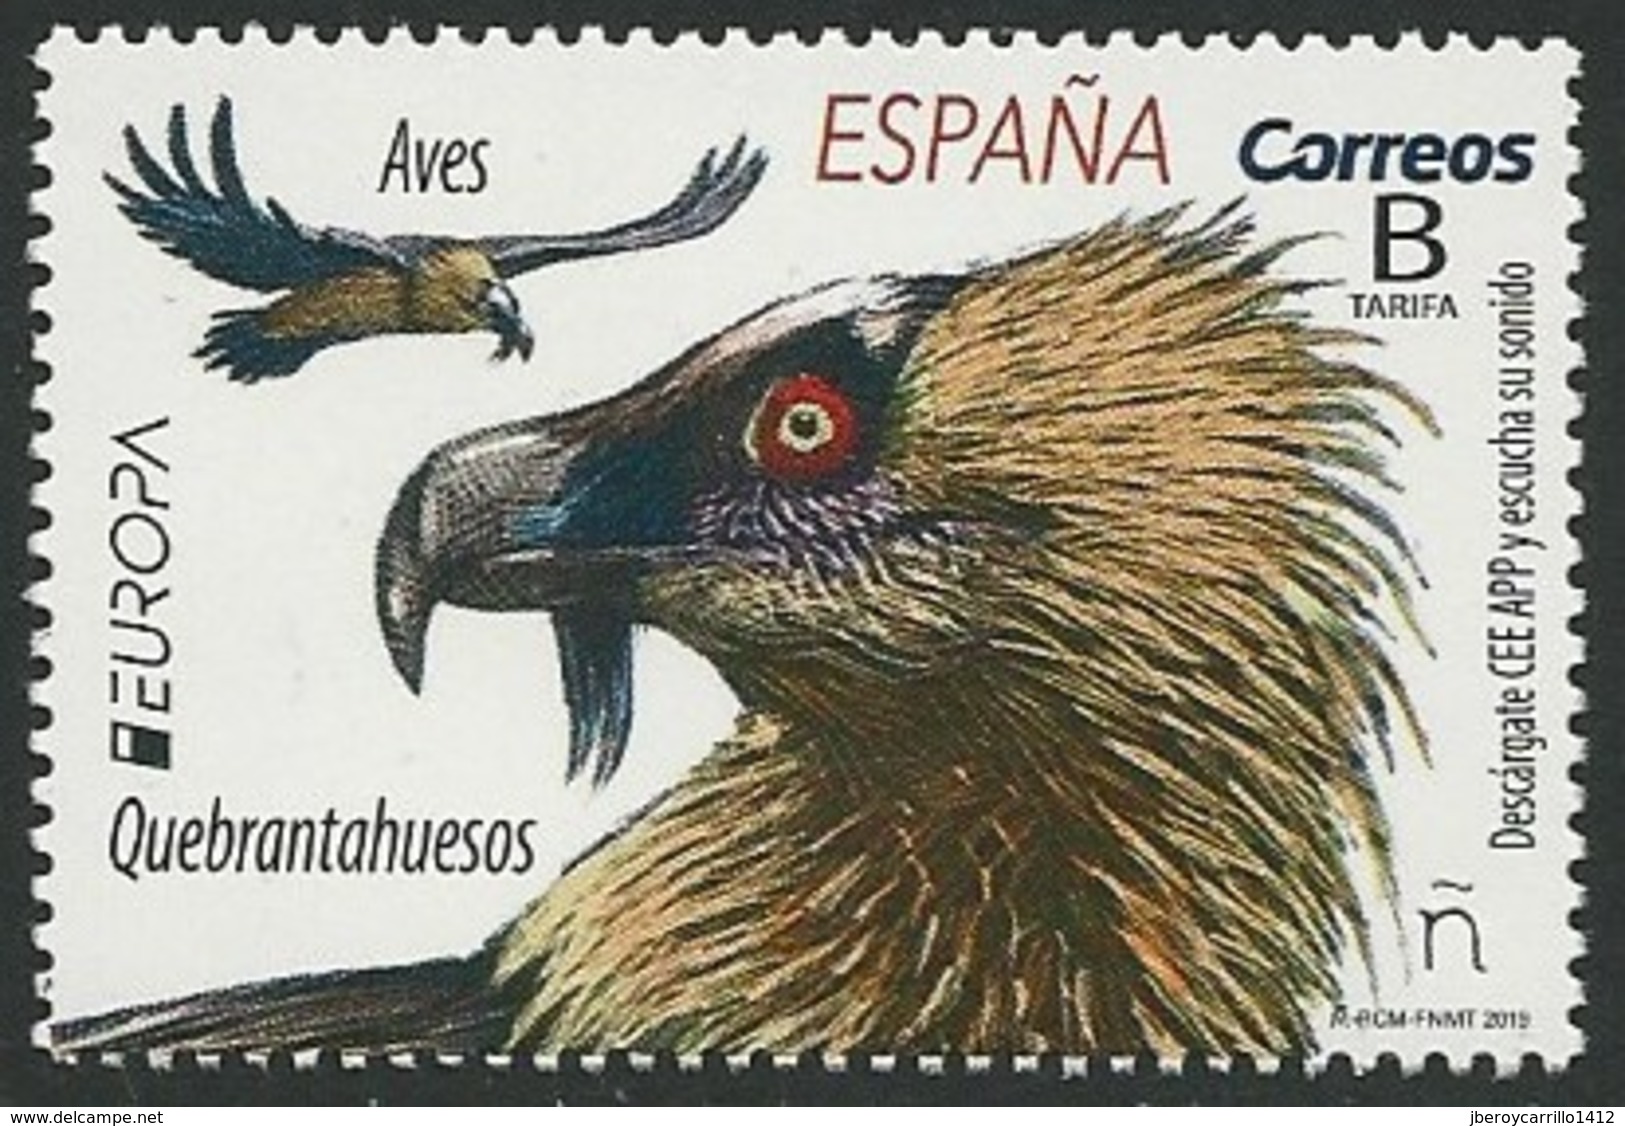 ESPAÑA/ SPAIN/ SPANIEN/ ESPAGNE - EUROPA 2019 -NATIONAL BIRDS.-"AVES - BIRDS - VÖGEL -OISEAUX"- SINGLE STAMP - 2019